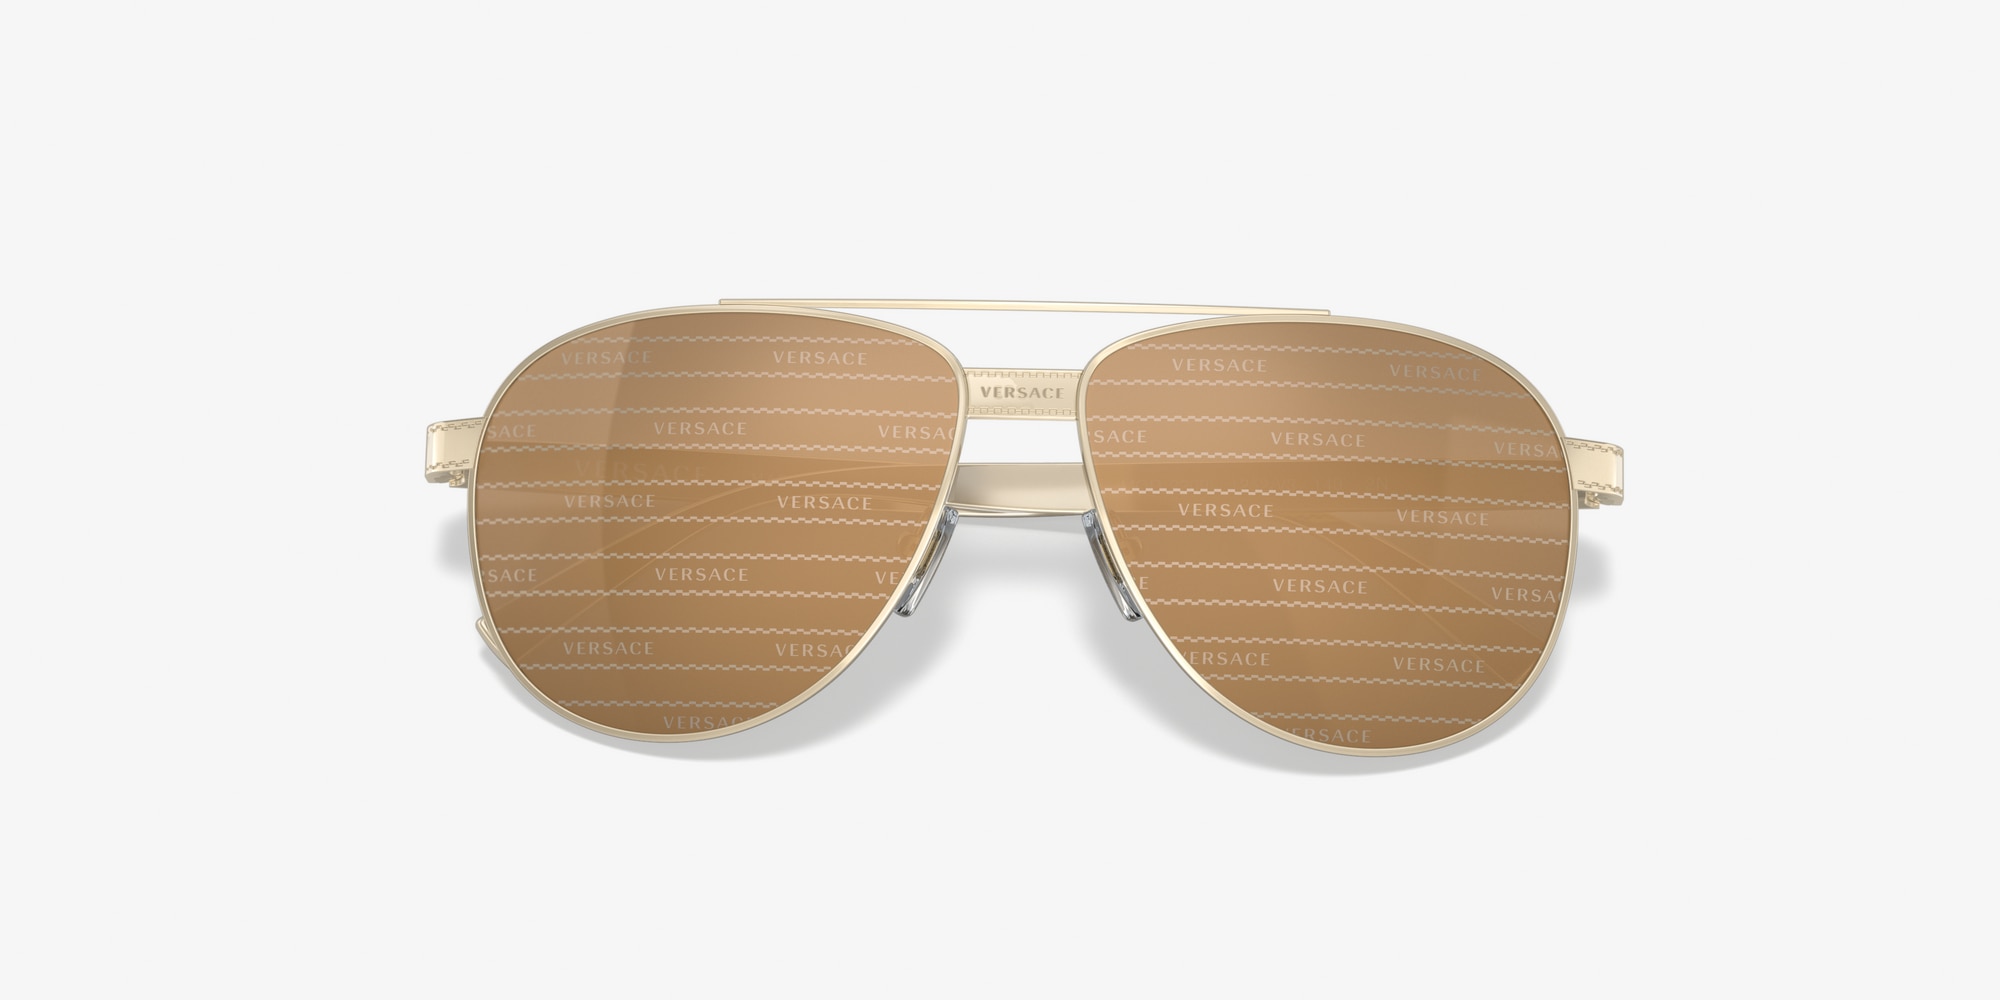 Gold Sunglasses | Sunglass Hut Canada